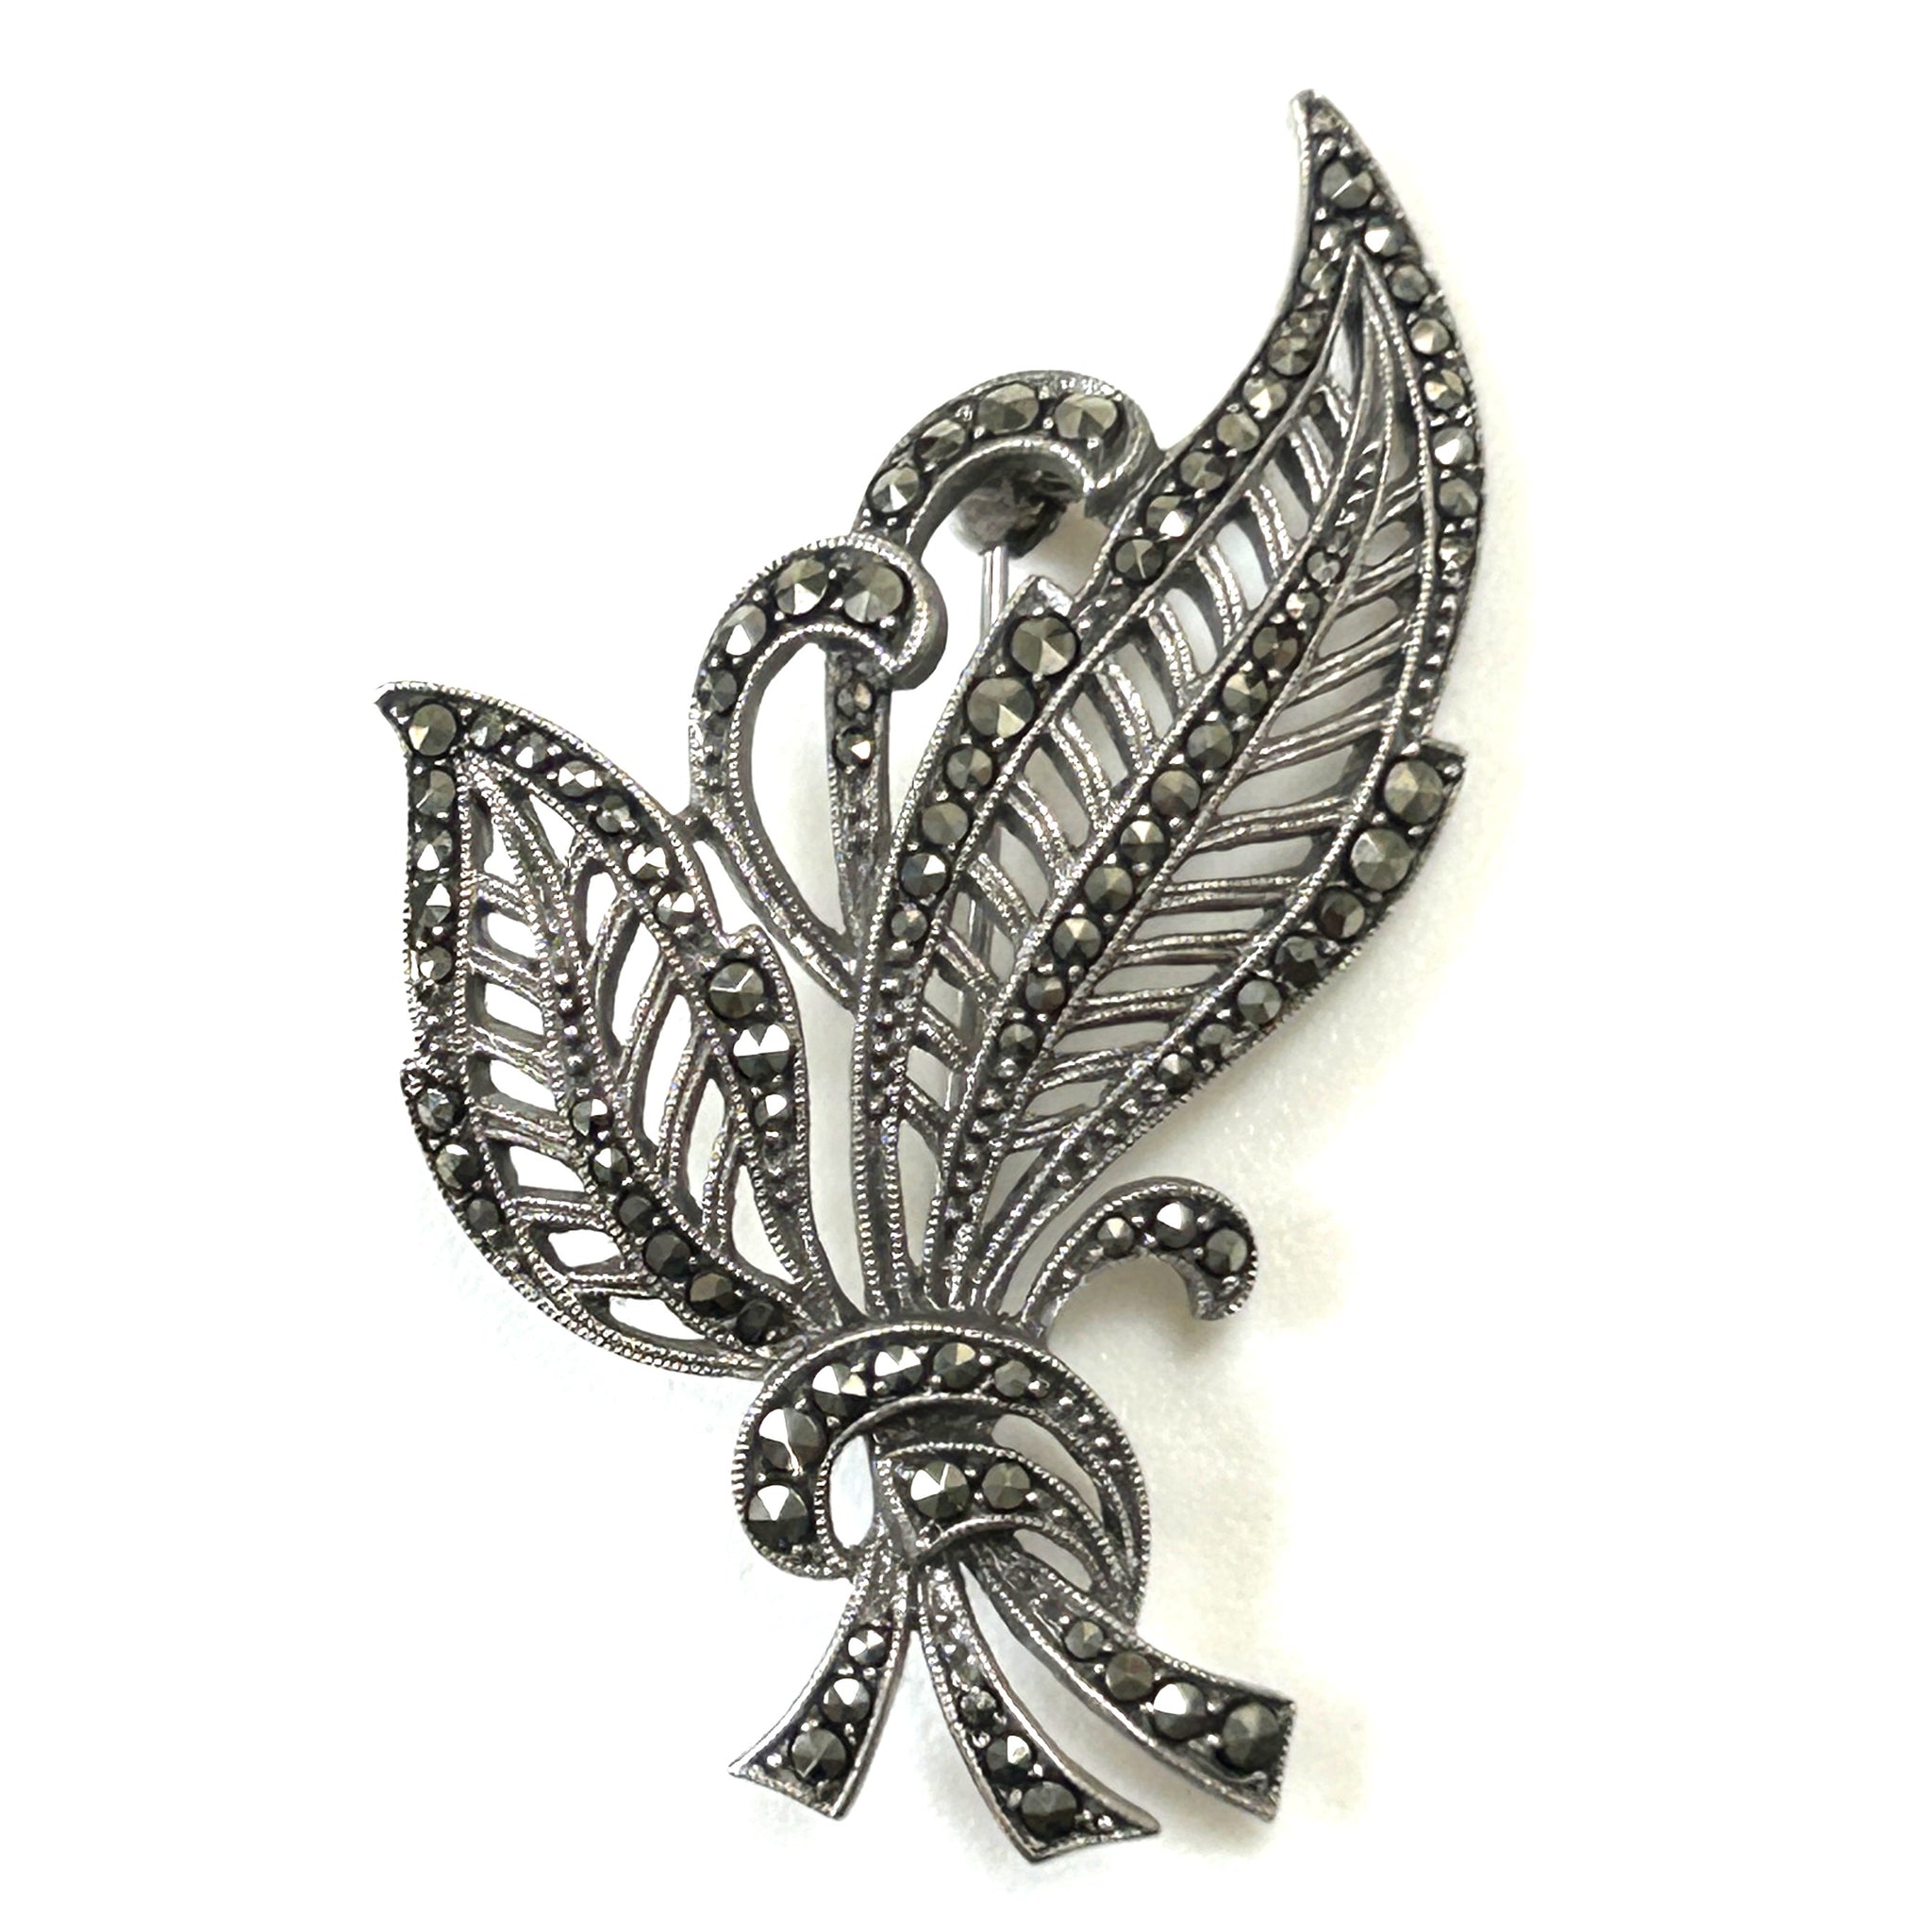 Vintage Silver and Marcasite “Leaf” Brooch